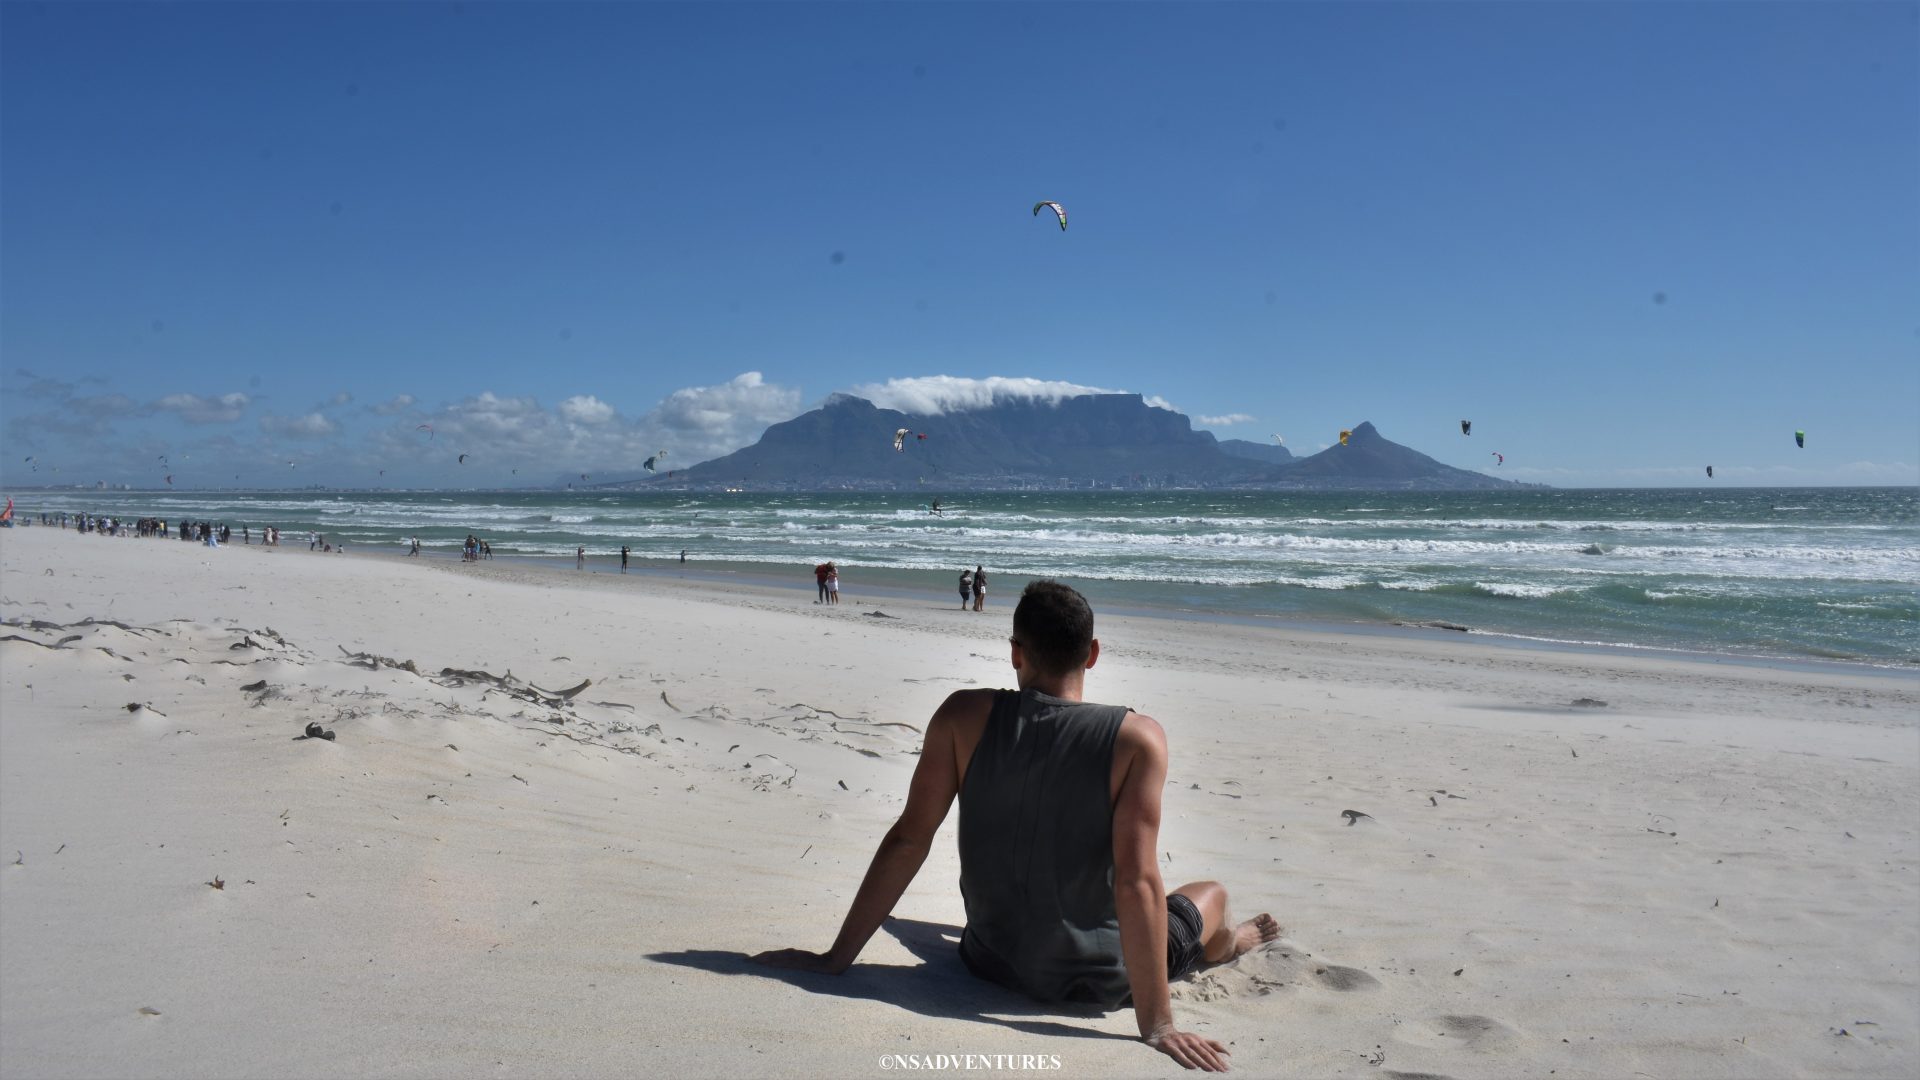 Bloubergstrand Beach, Cape Town